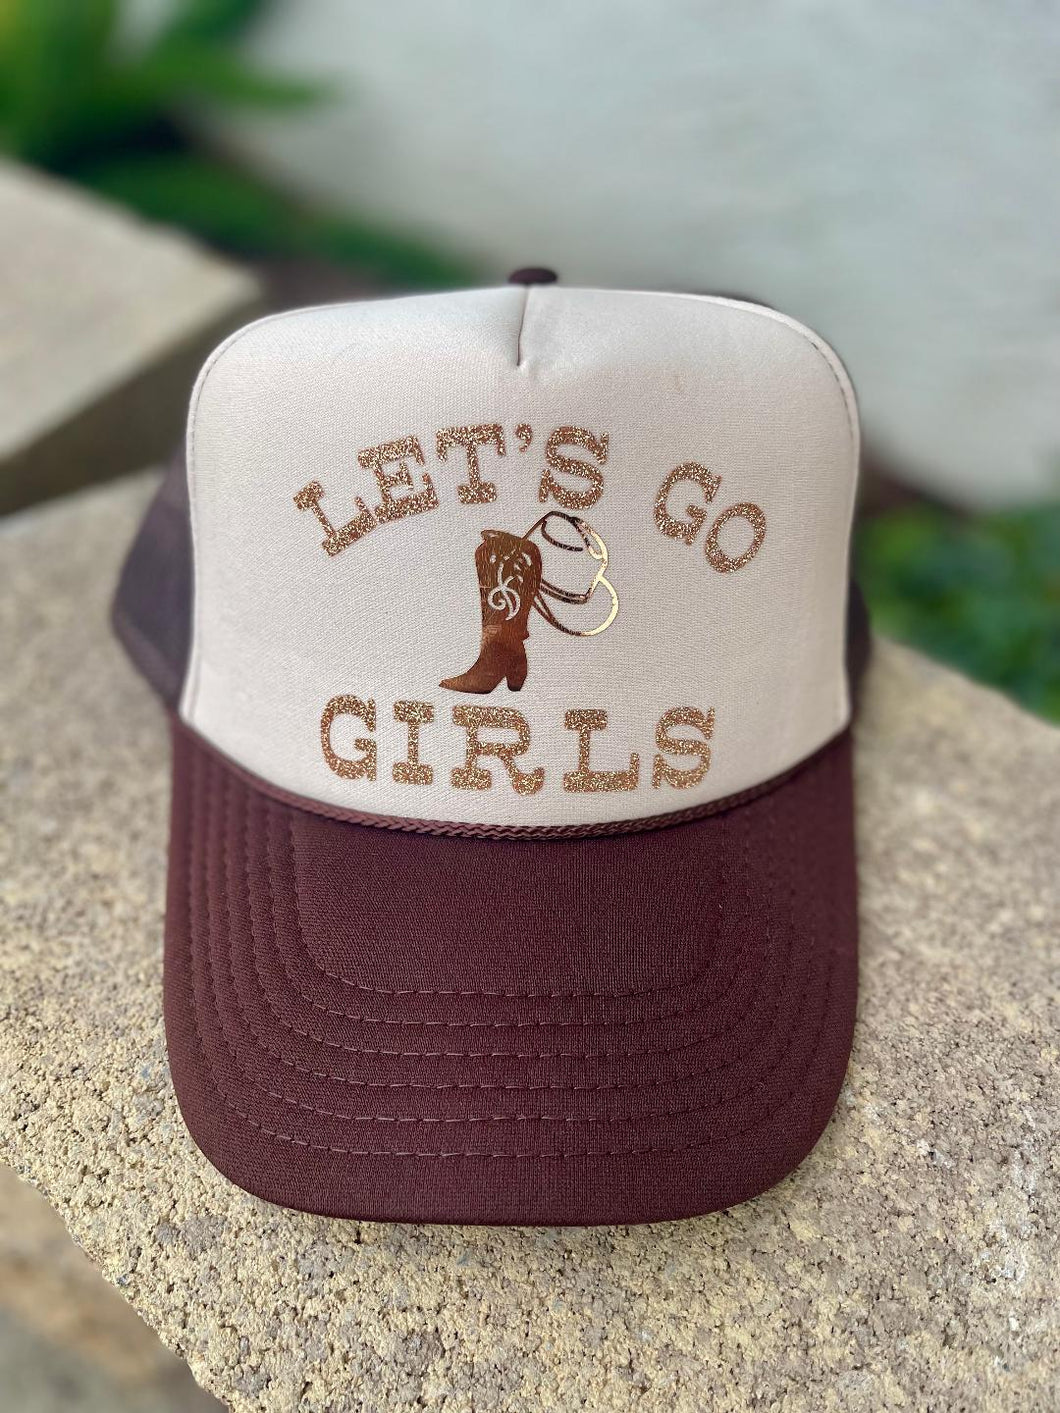 Let's Go Girls Graphic Trucker Hat